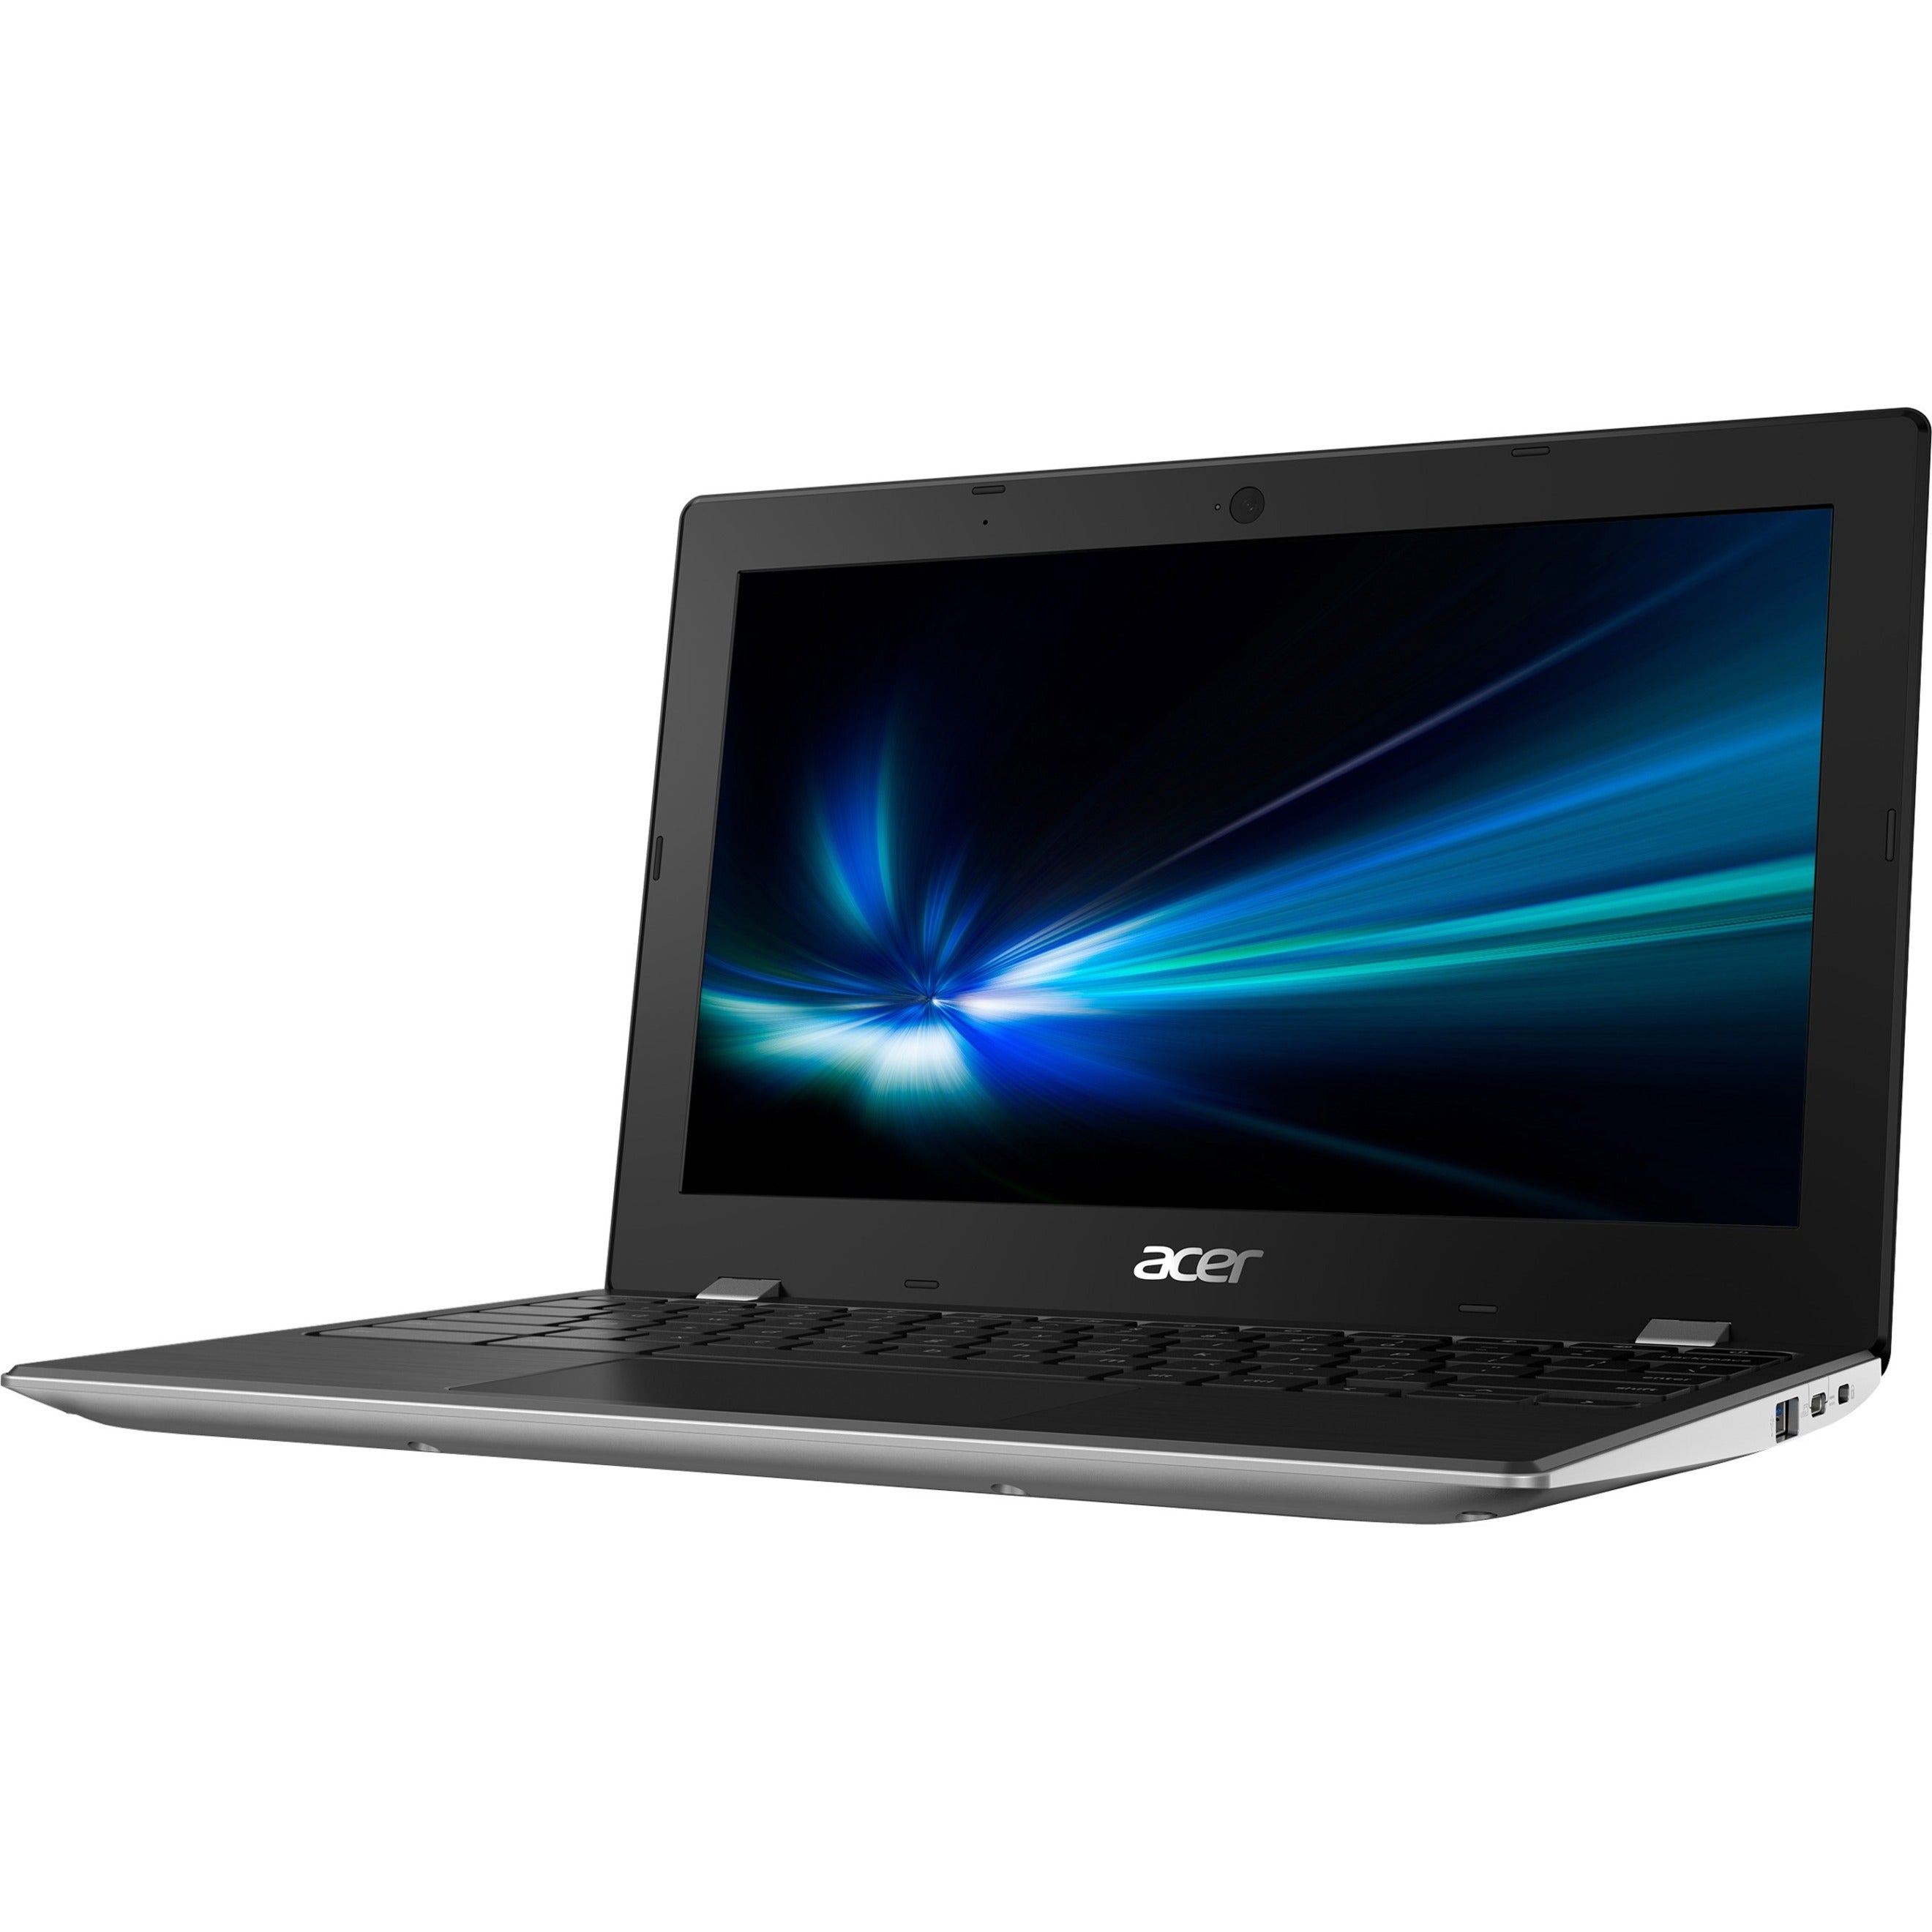 Acer NX.ATSAA.001 Chromebook 311 C733-C736 Chromebook, 11.6 HD, 4GB RAM, 32GB Flash Memory, ChromeOS